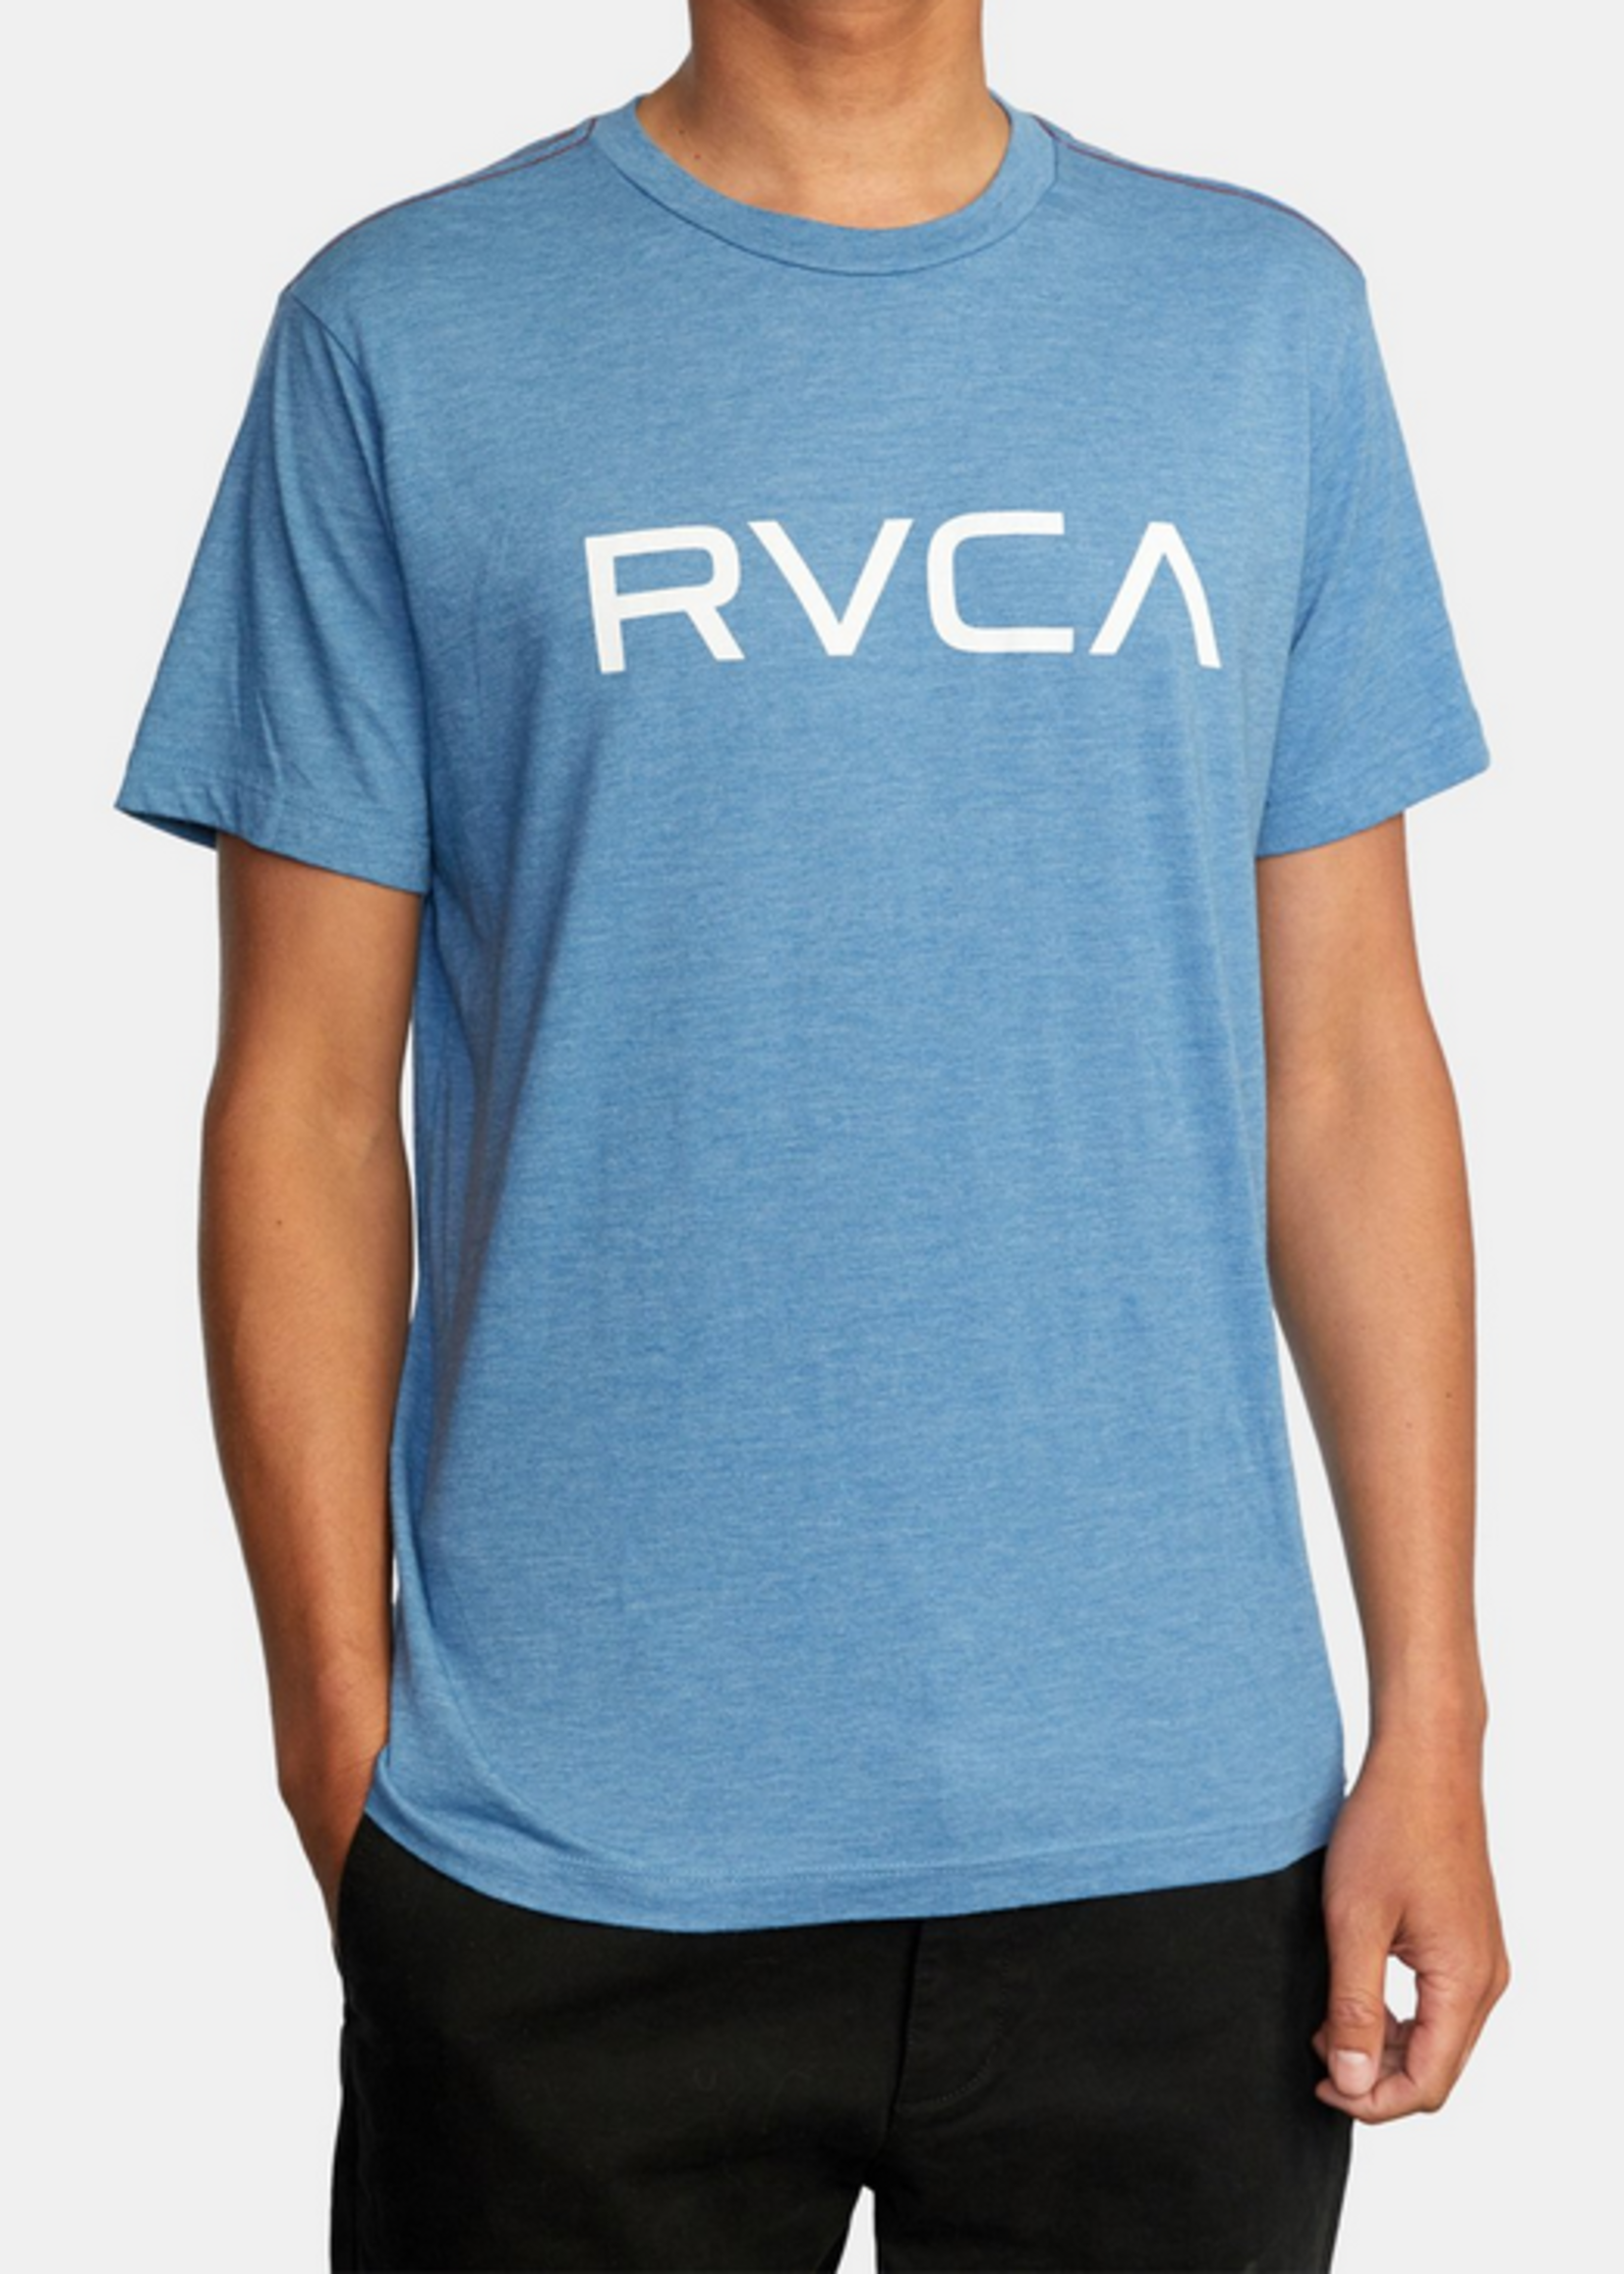 RVCA Big RVCA SS Tee - French Blue